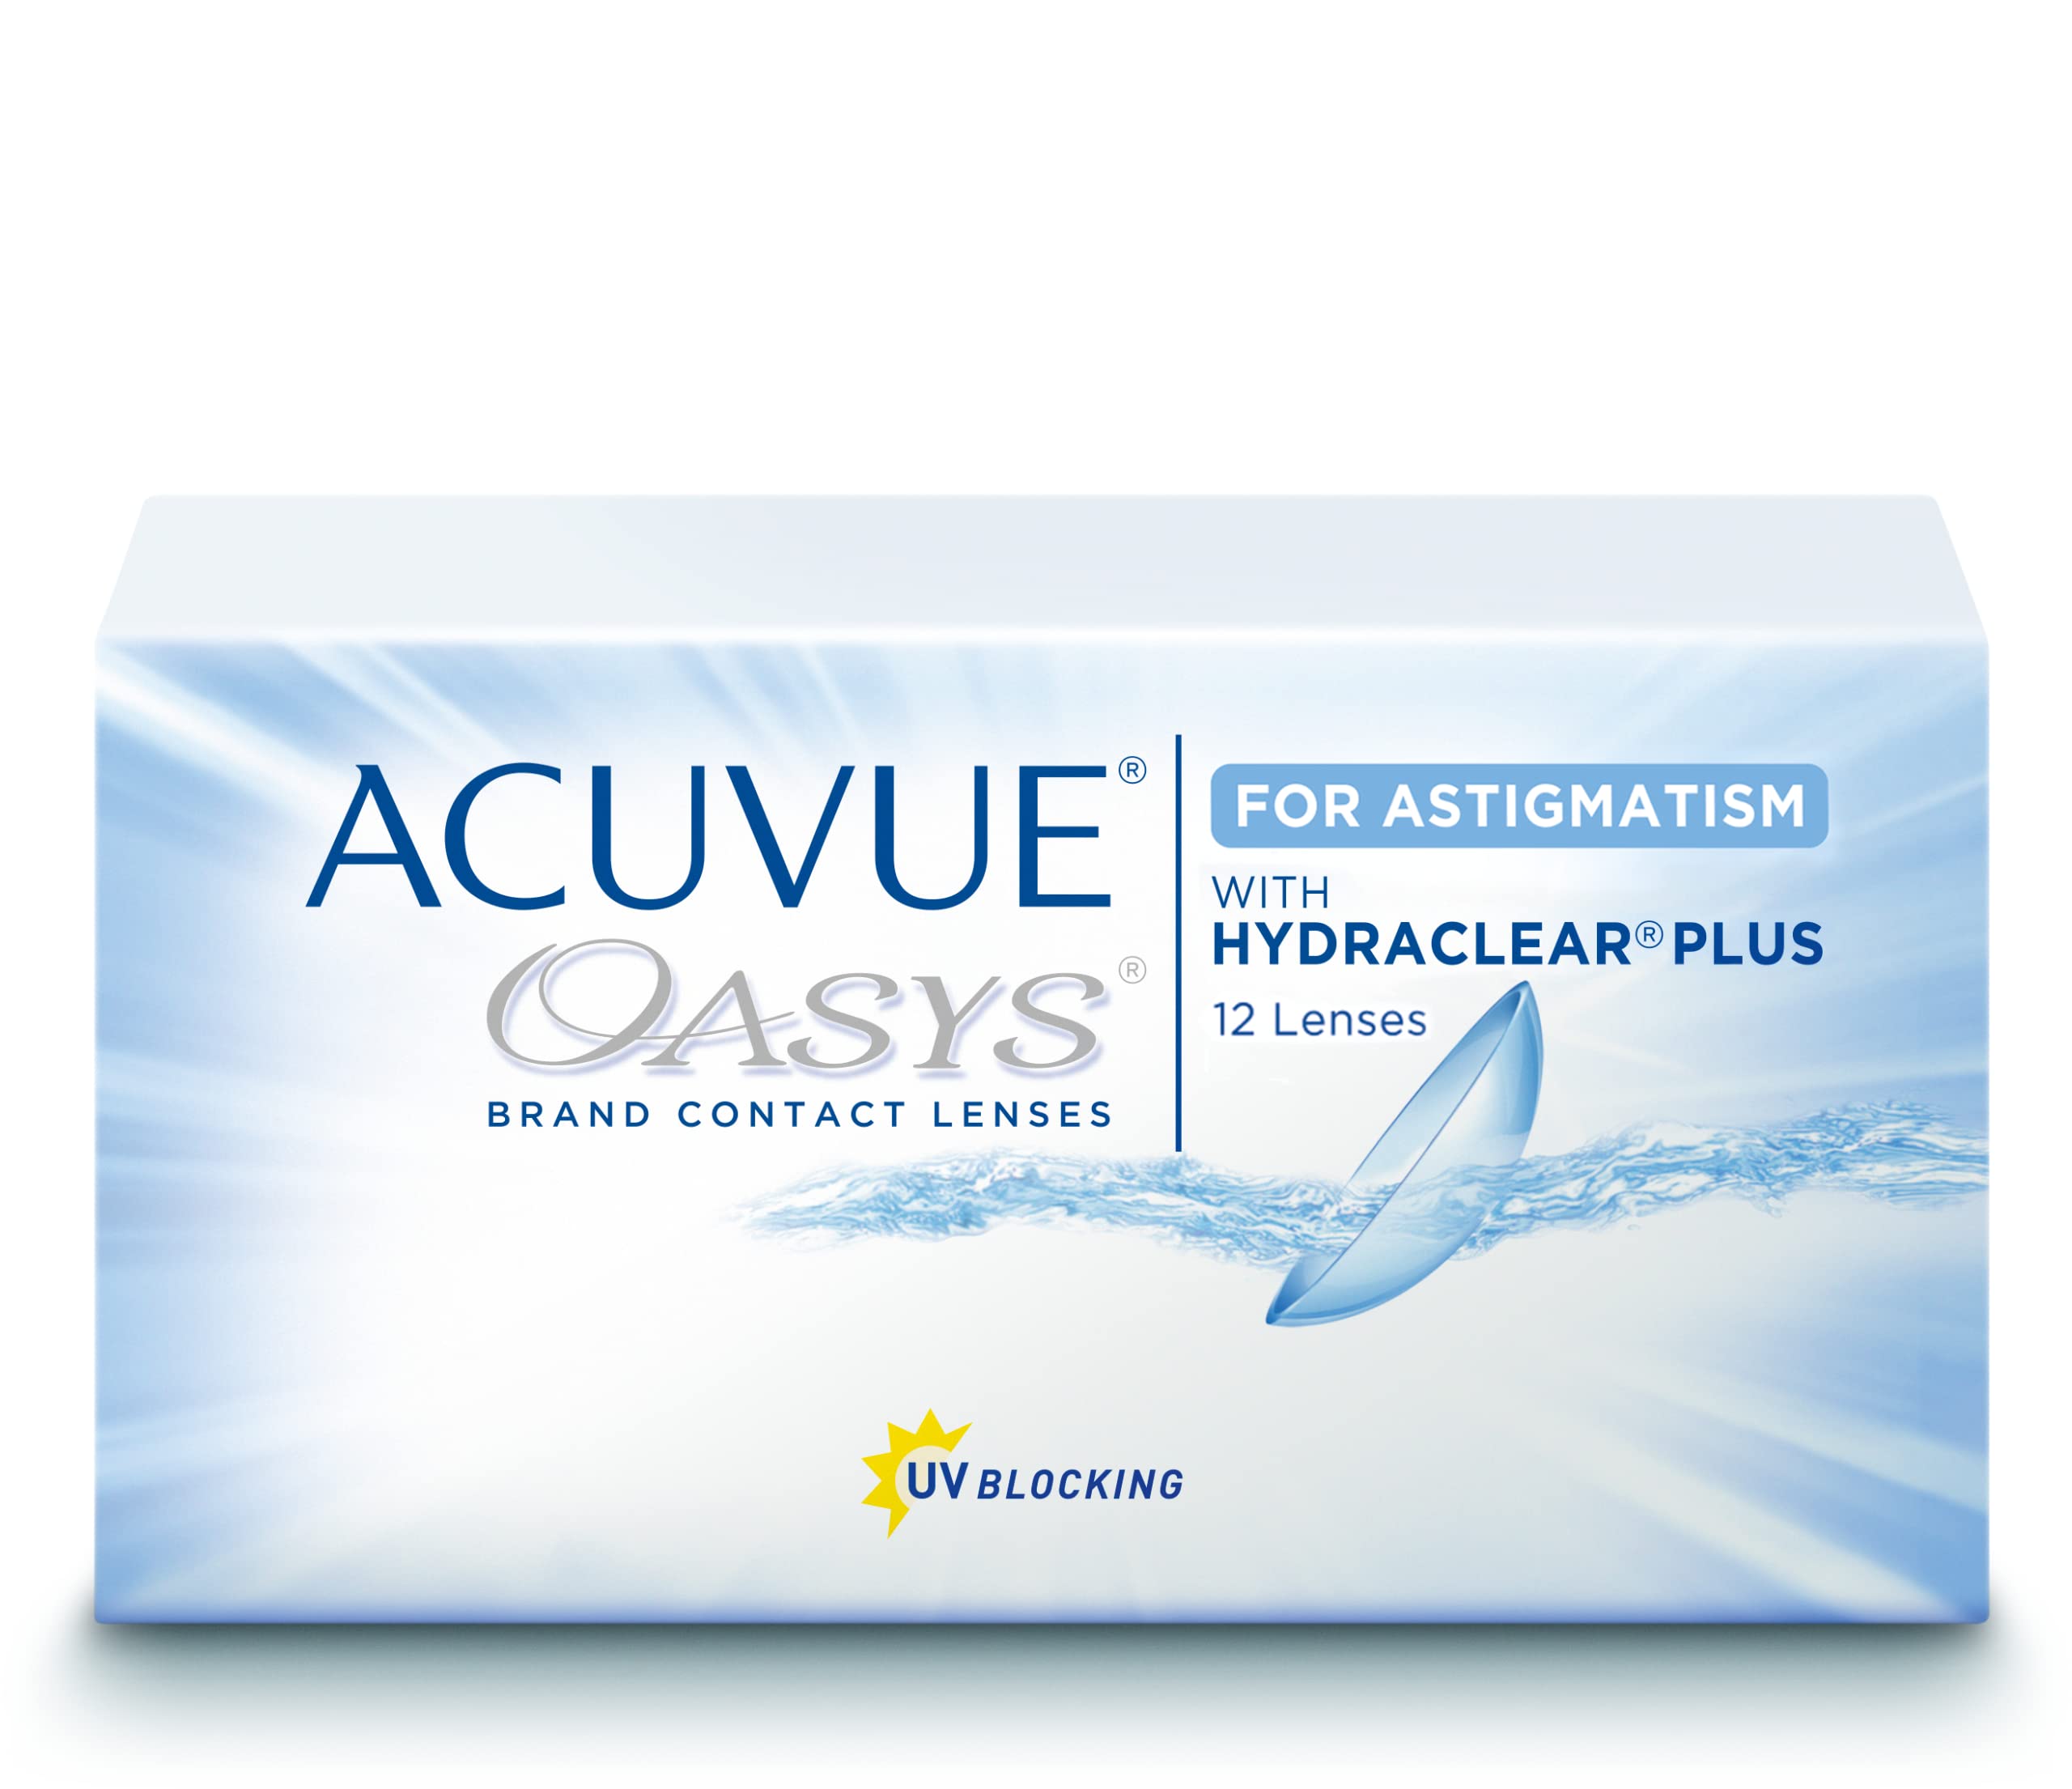 Acuvue Oasys for Astigmatism 2-Wochenlinsen weich, 12 Stück/BC 8.6 mm/DIA 14.5 / CYL -2.75 / Achse 70 / -2.5 Dioptrien